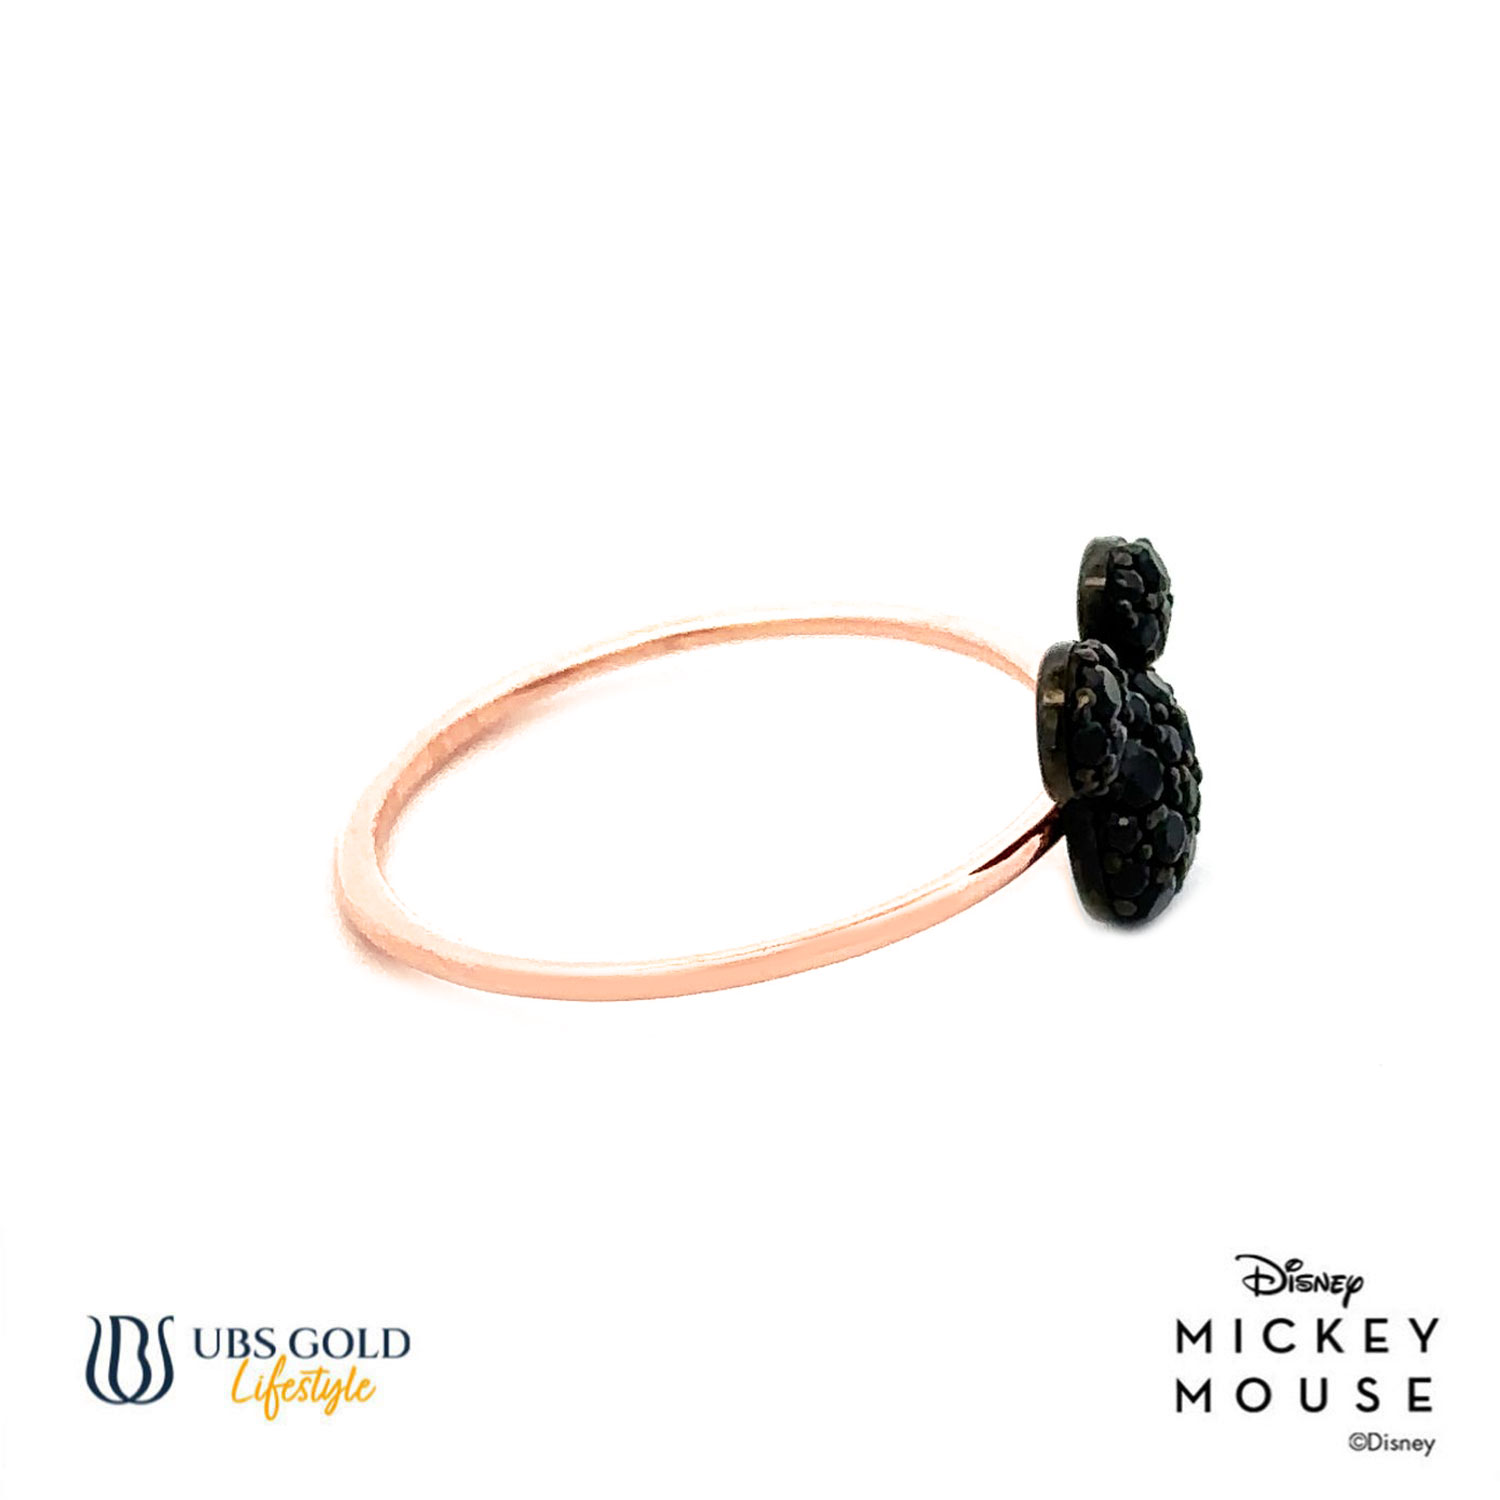 UBS Gold Cincin Emas Disney Mickey Mouse - Ccy0205 - 17K